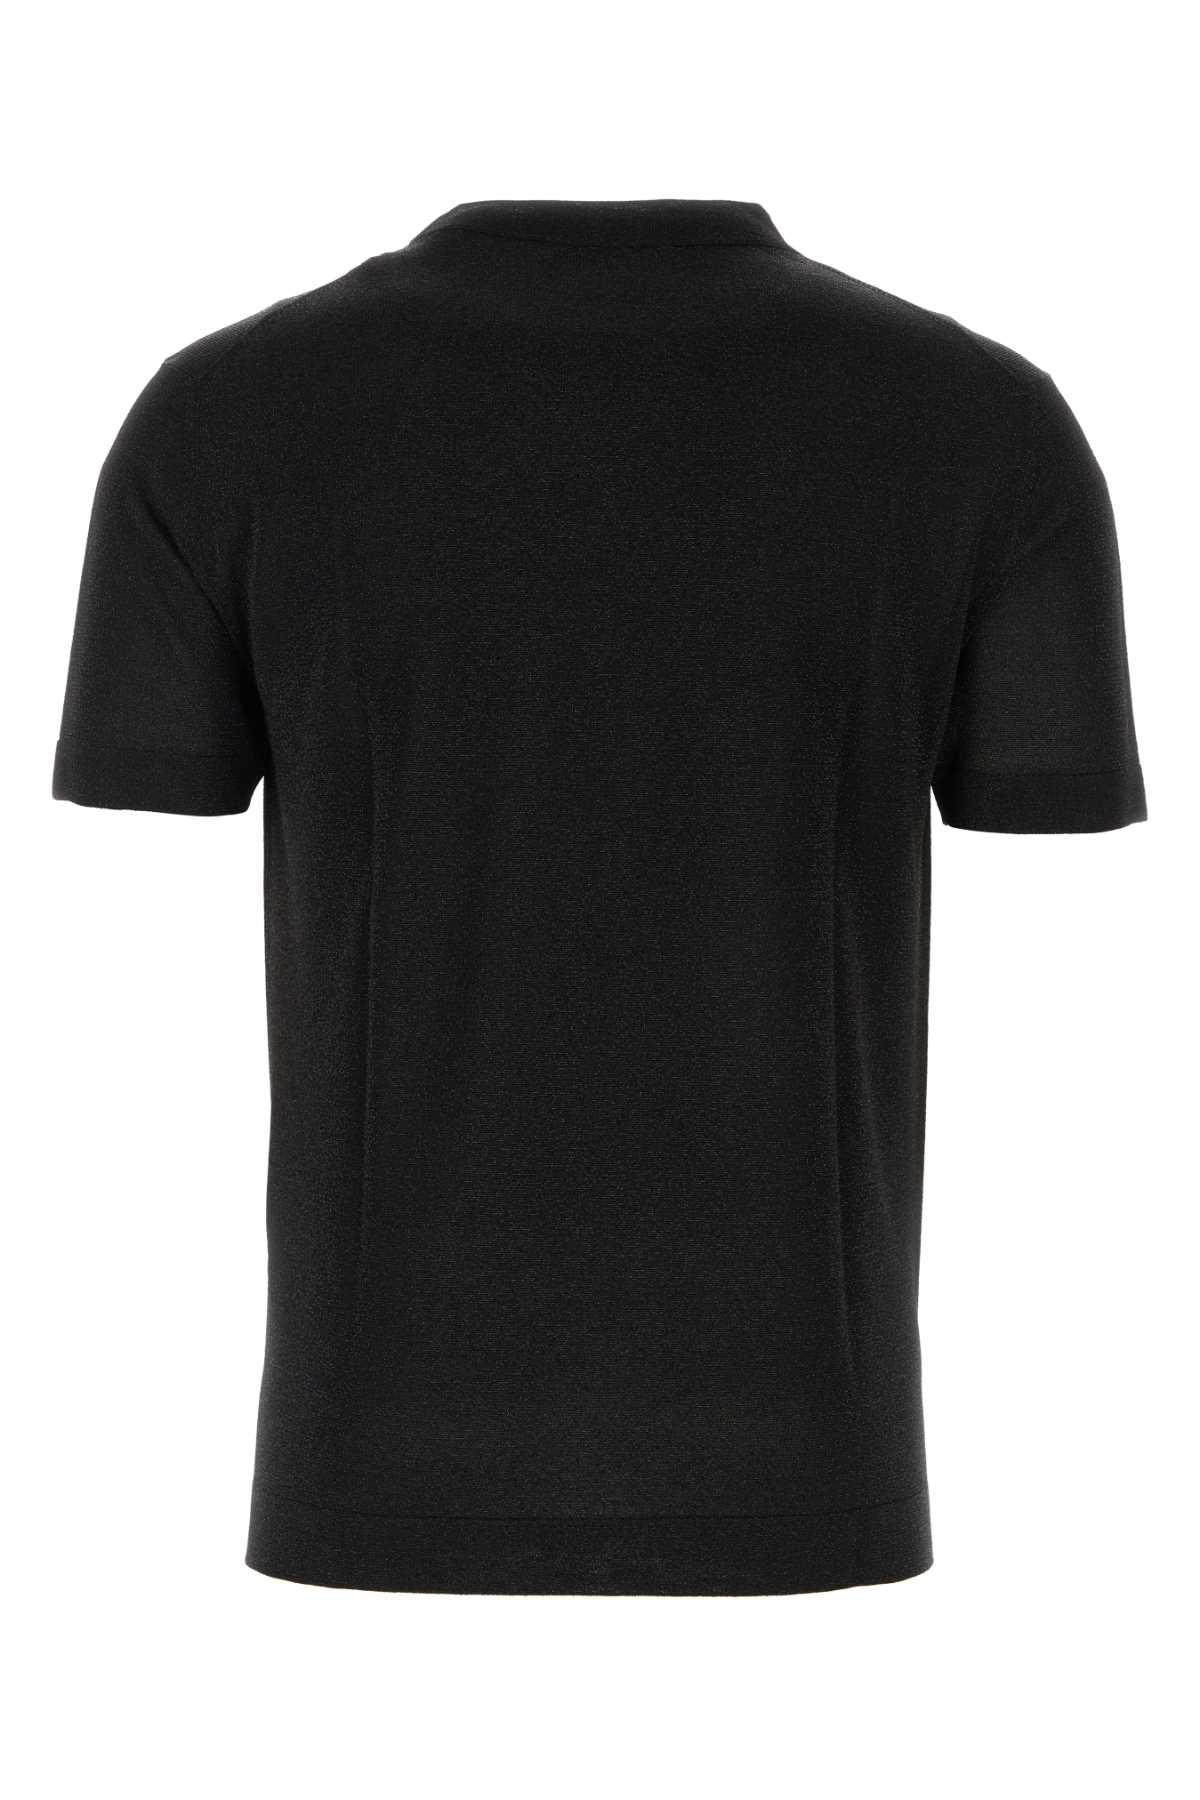 Missoni Black Viscose Blend T-shirt In S91j5